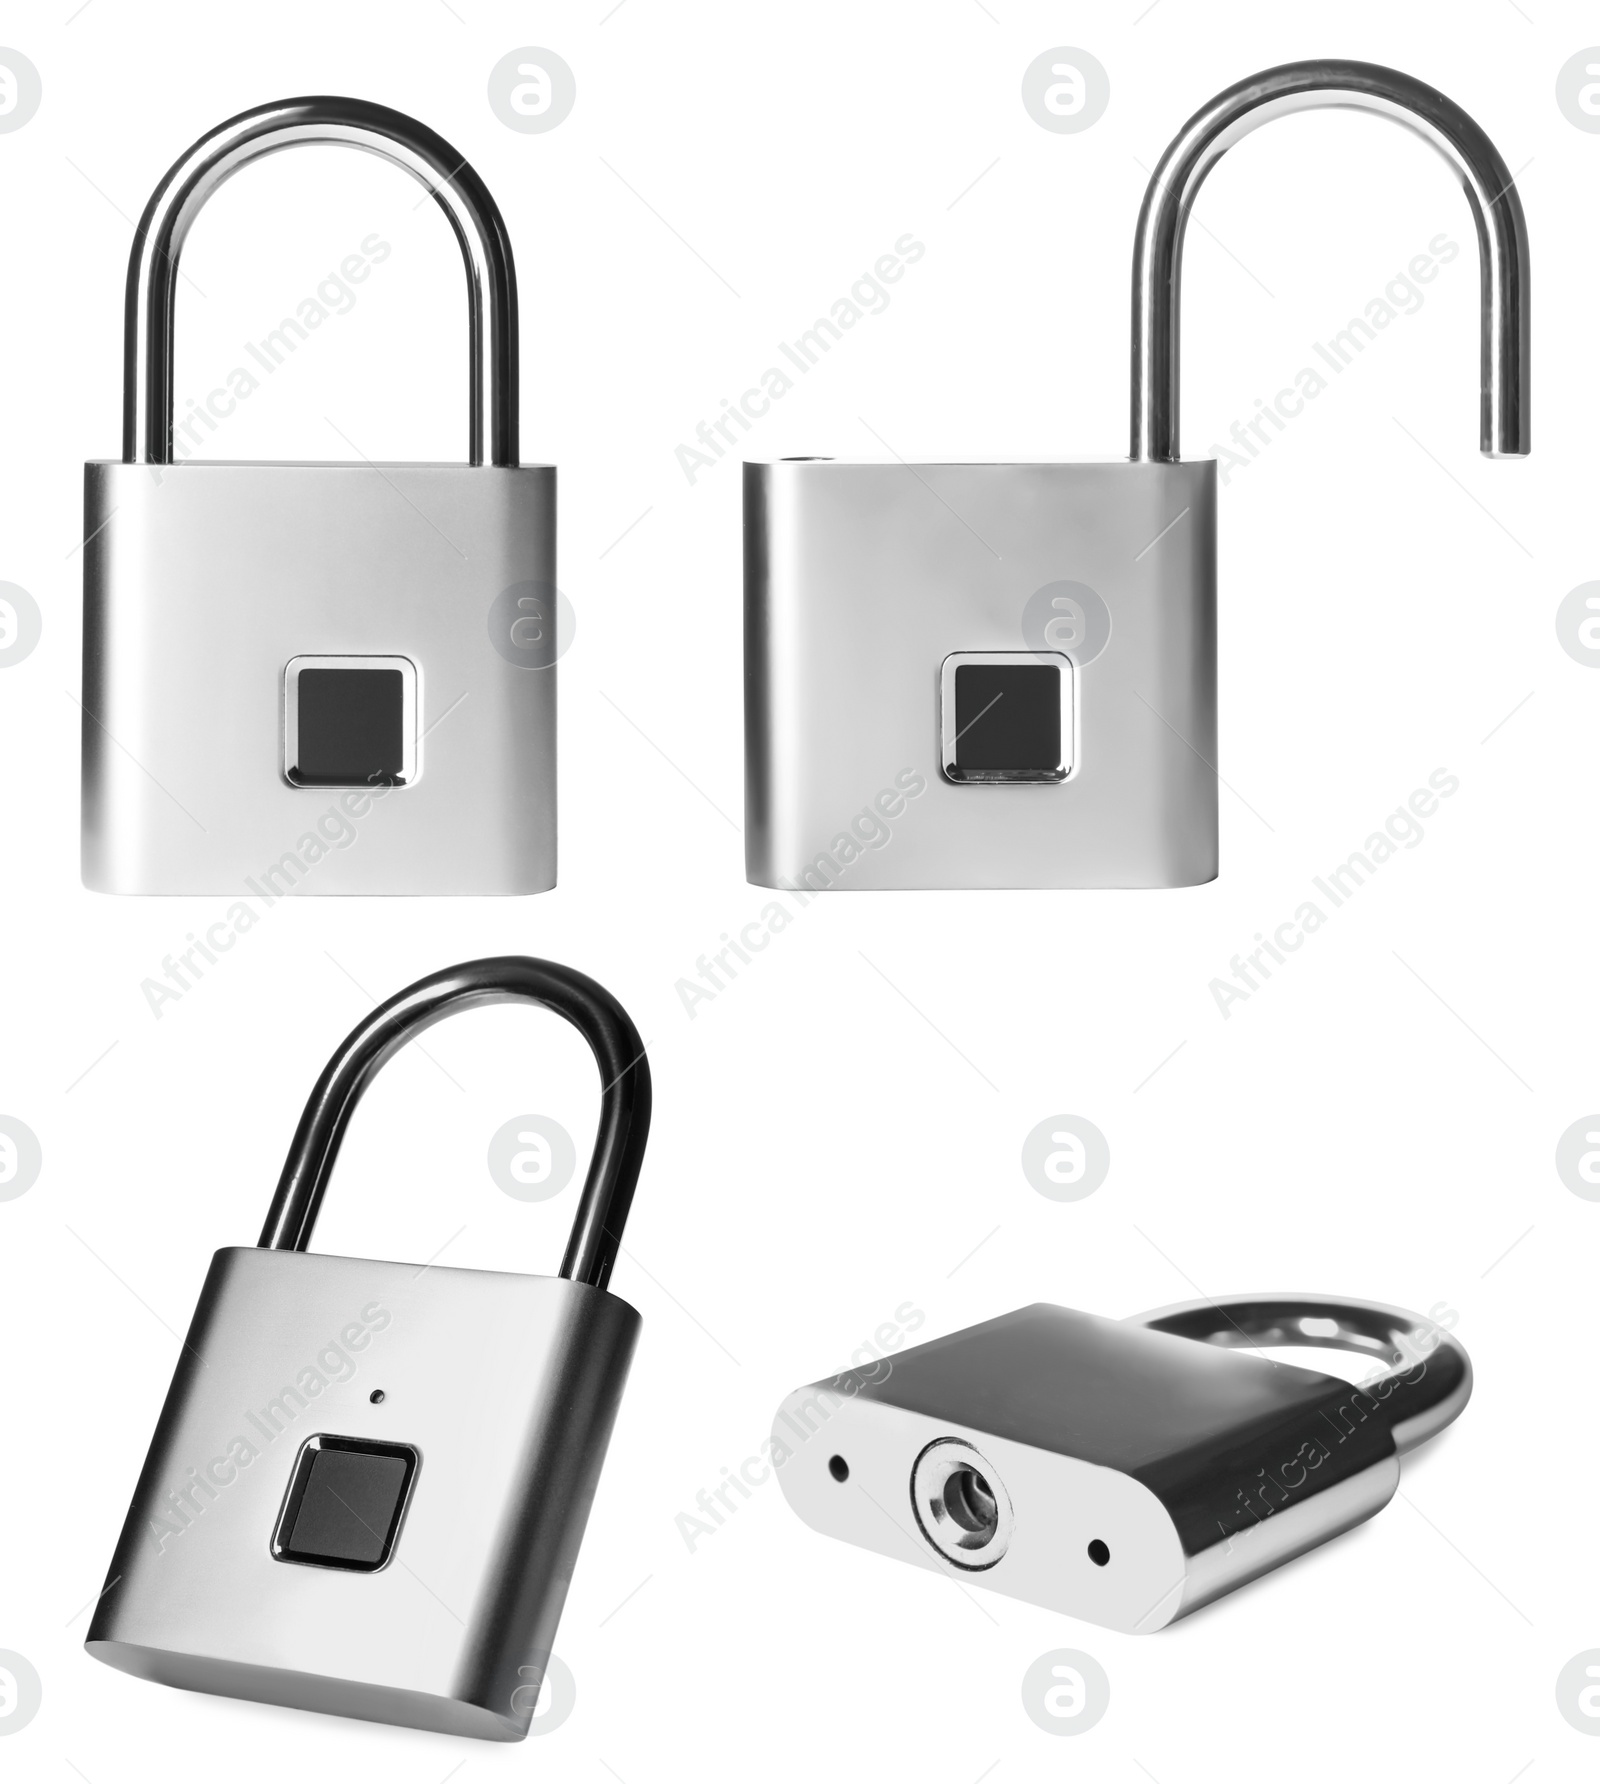 Image of Set with metal padlocks on white background